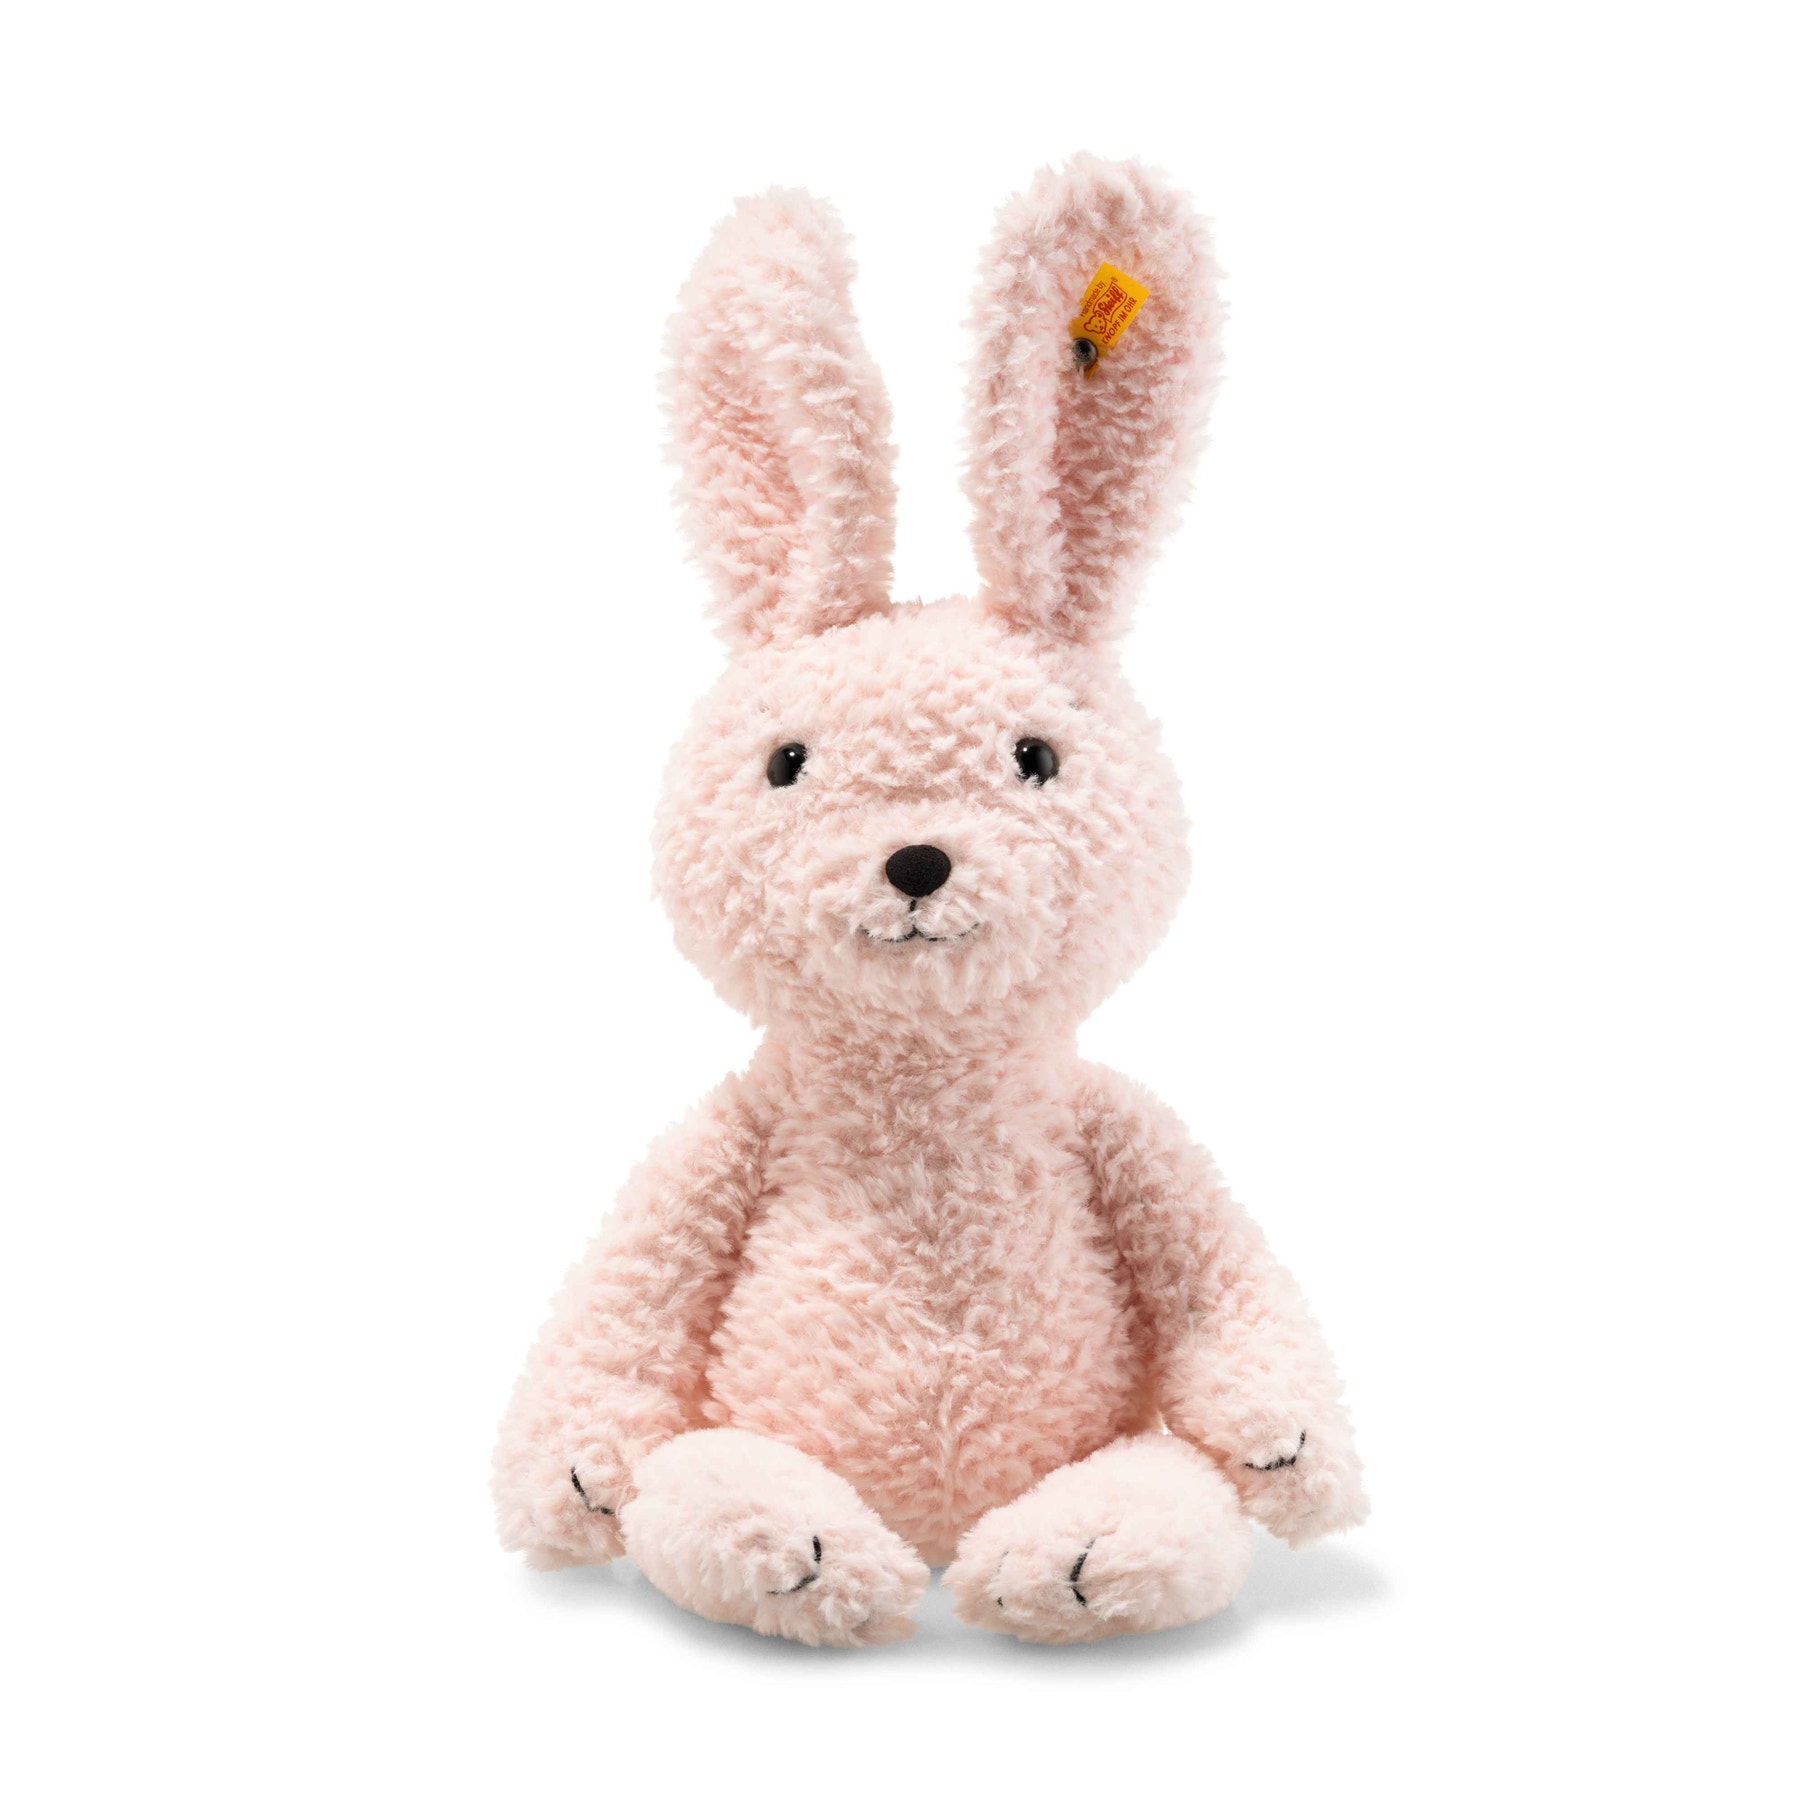 Soft Cuddly Friends Candy rabbit